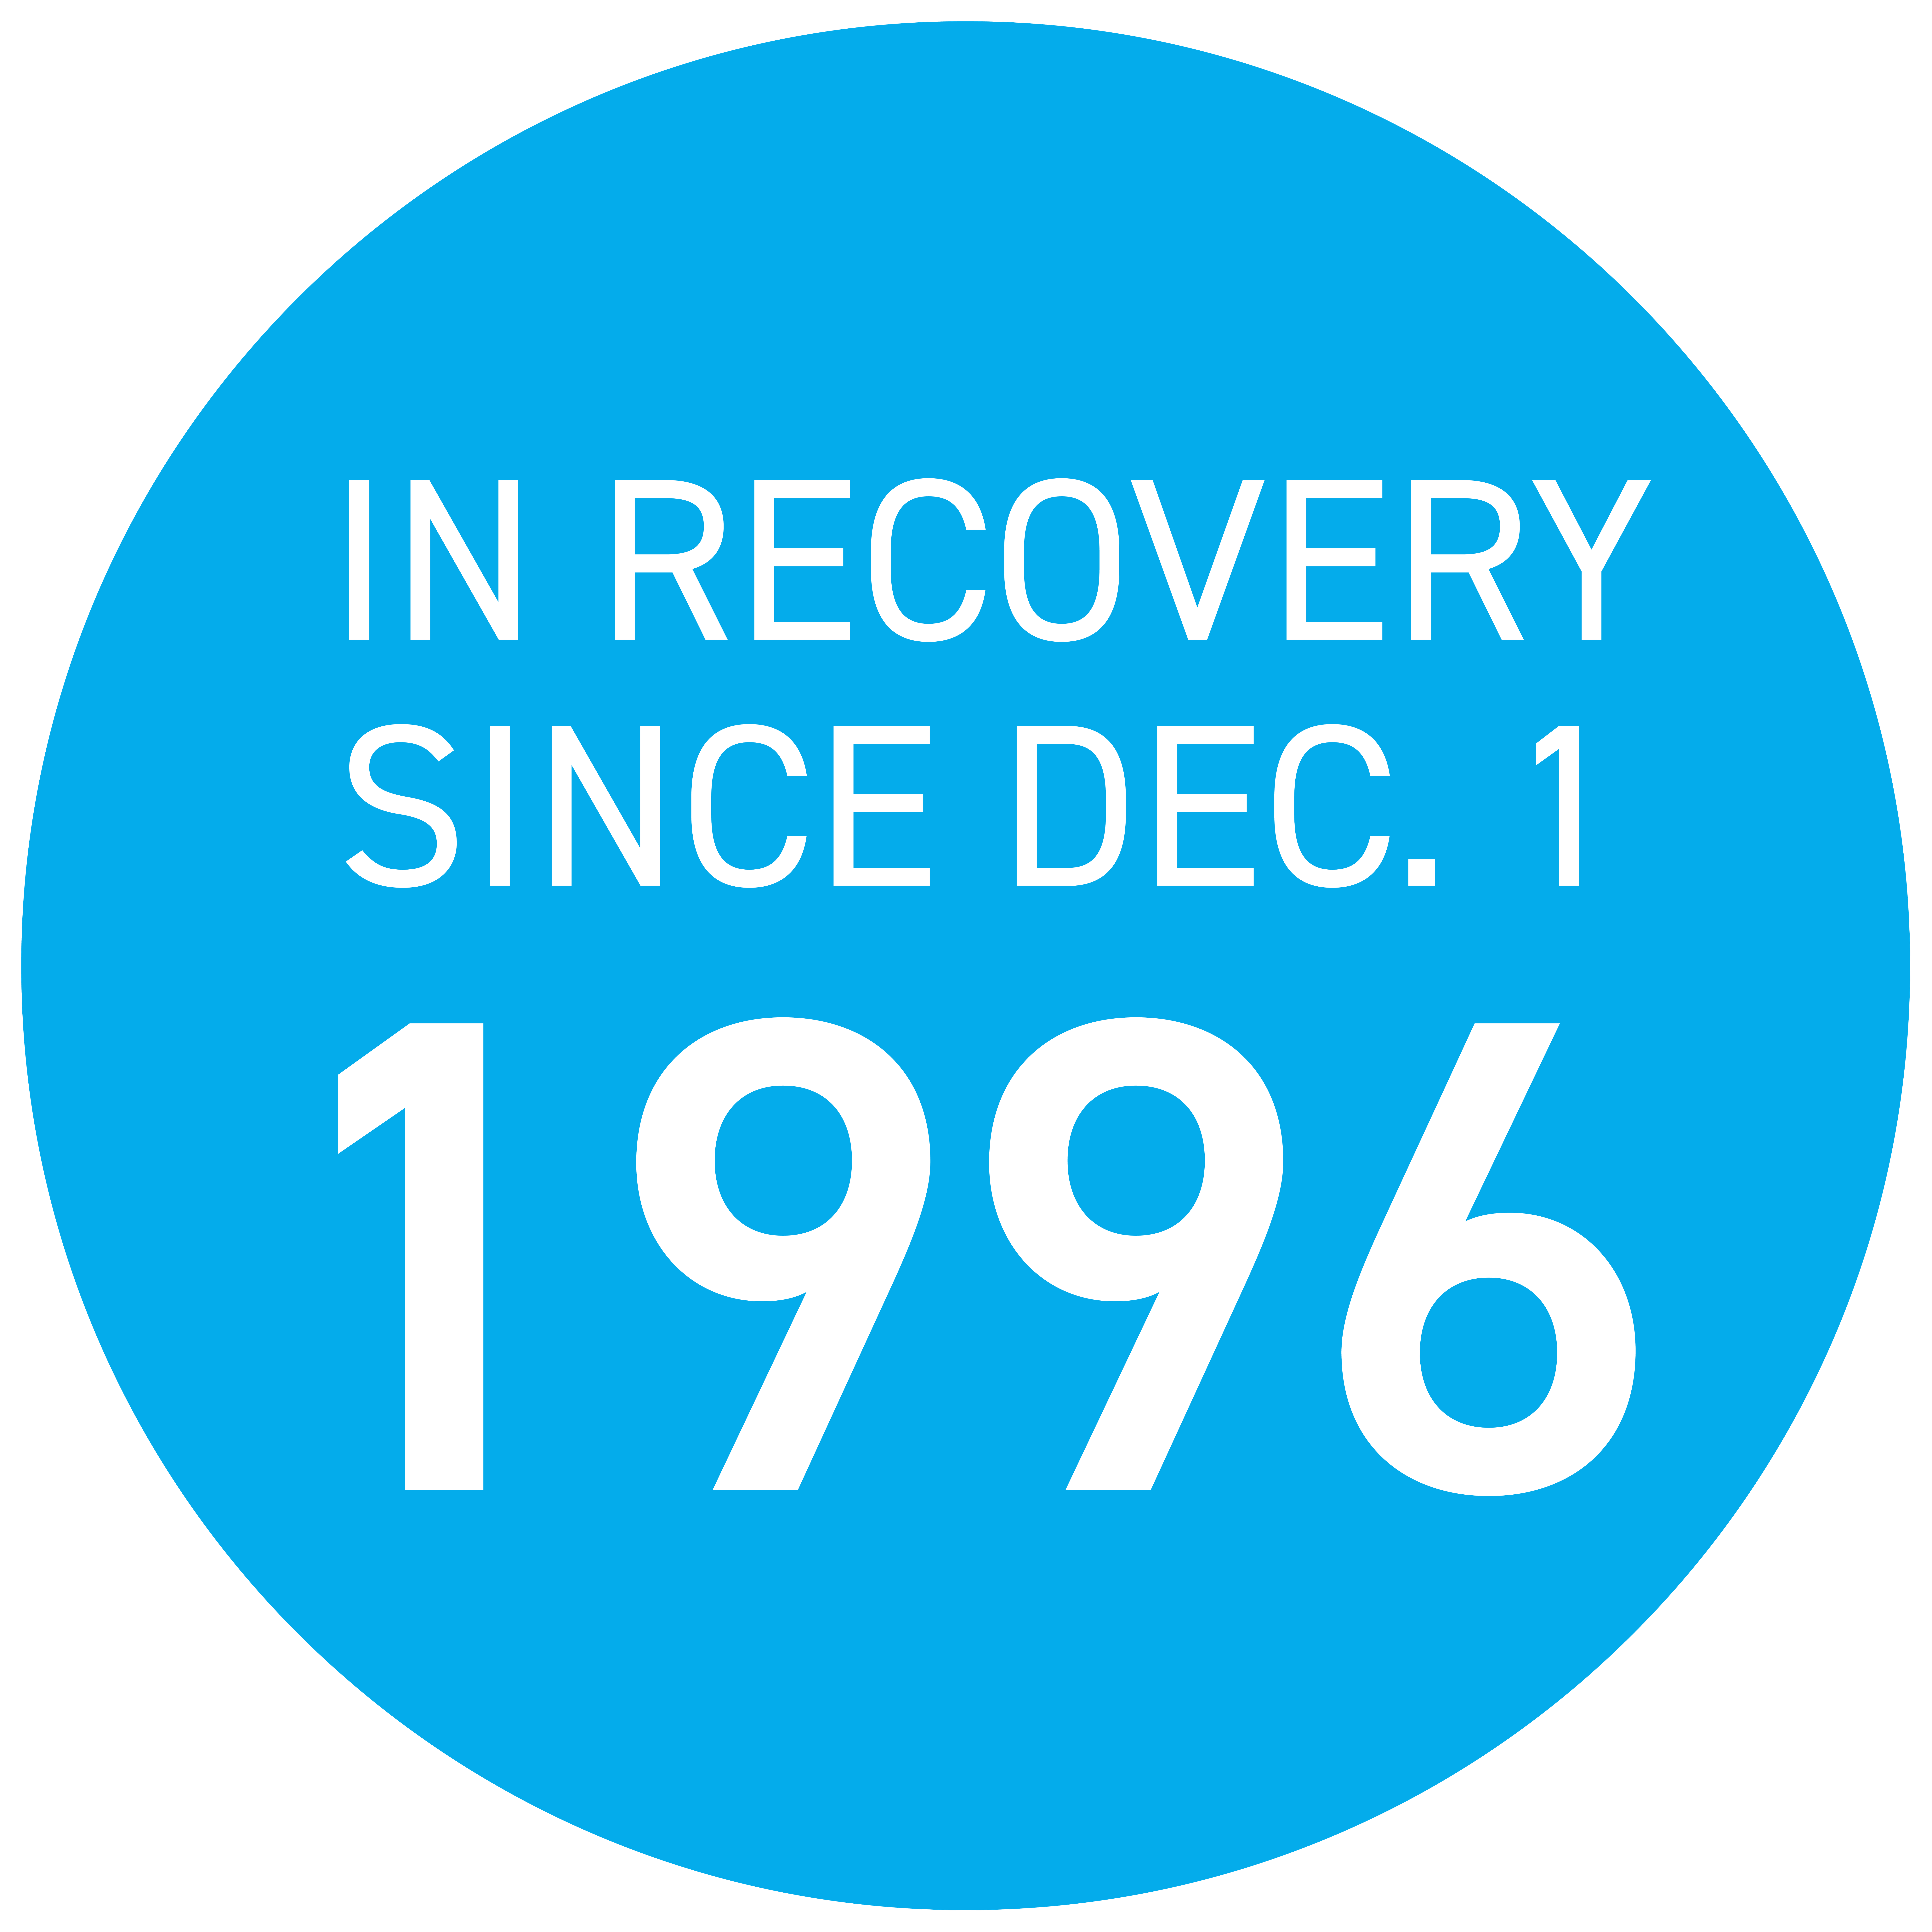 Jorma Kaukonen recovery date: December 1, 1996